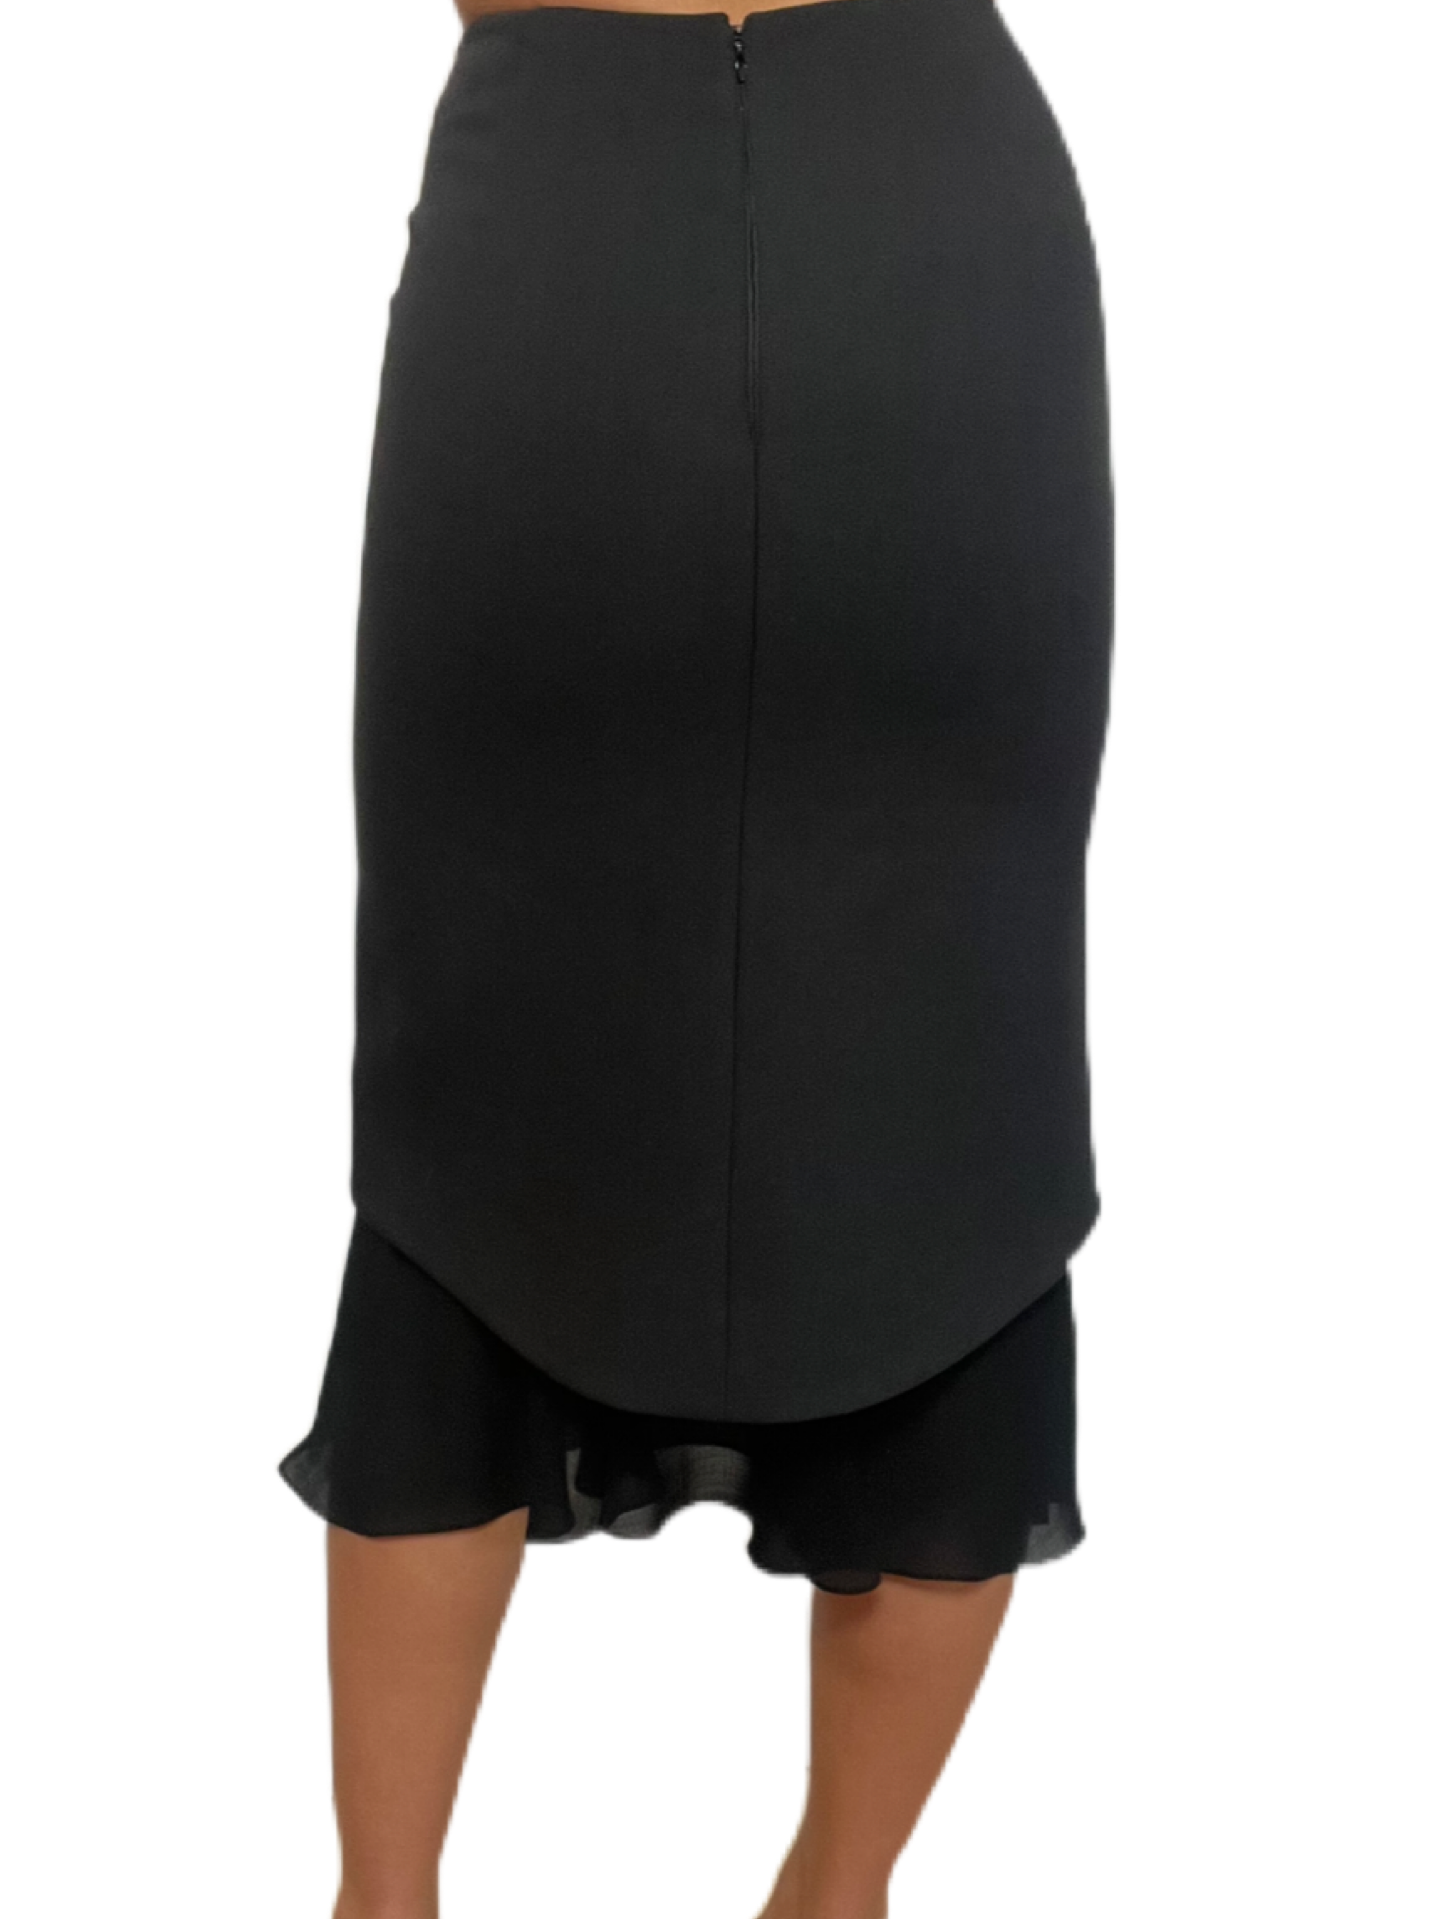 Balenciaga Black Frill Bottom Skirt. Size: 36